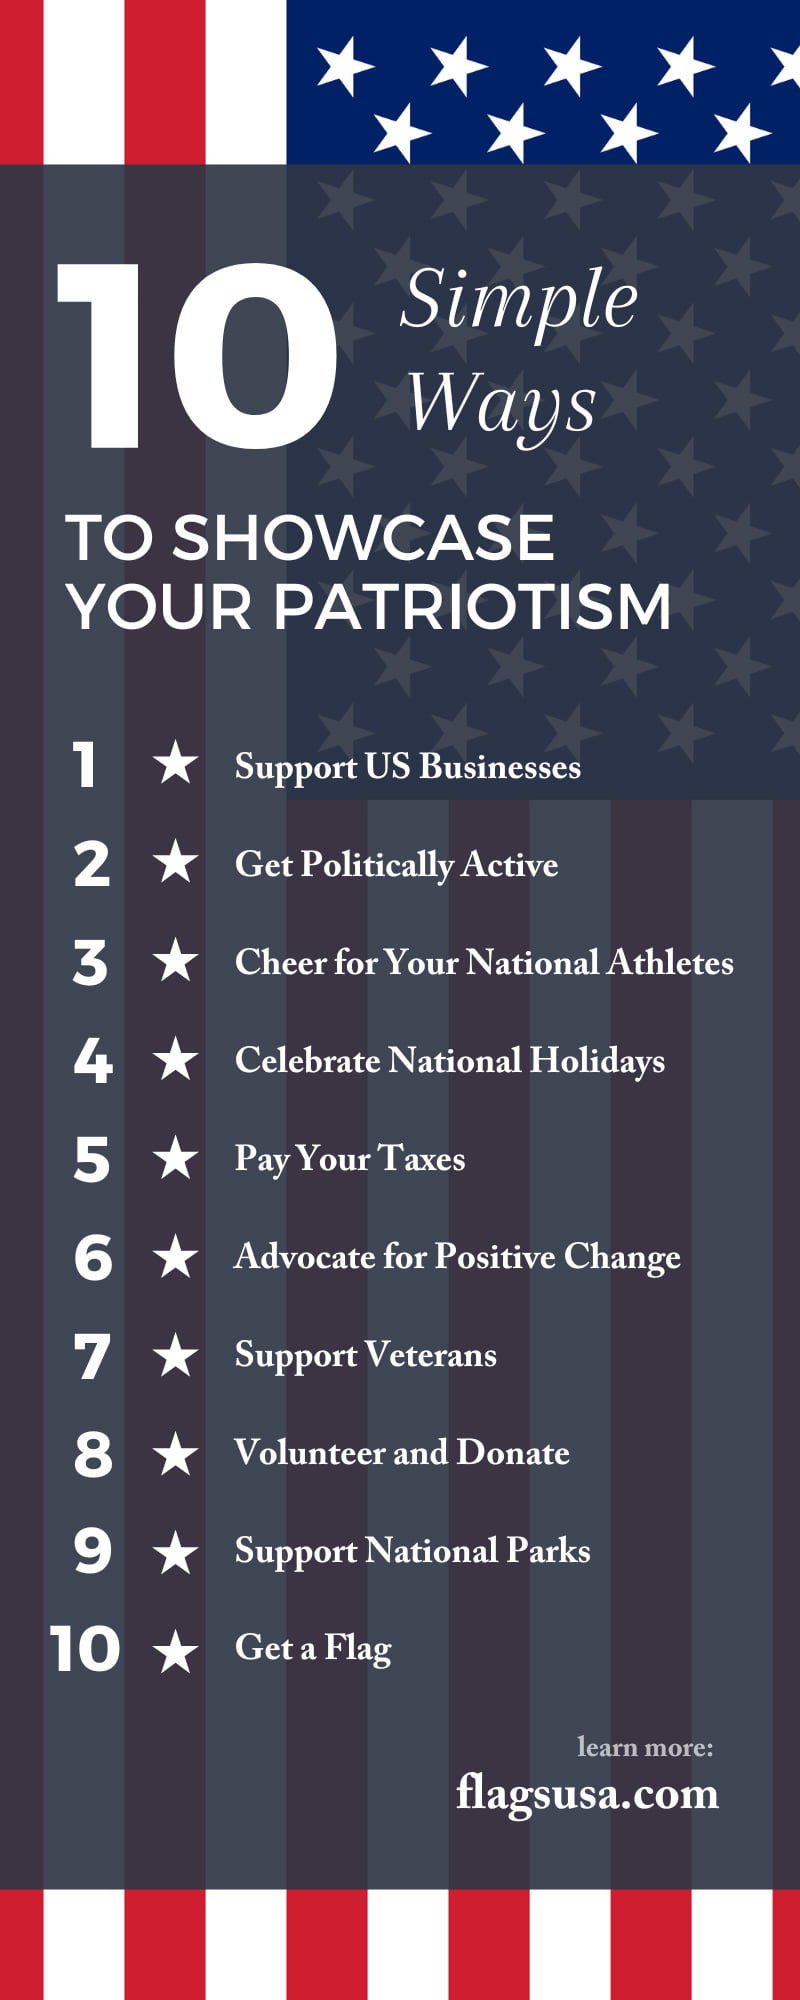 10 simple ways to showcase your patriotism